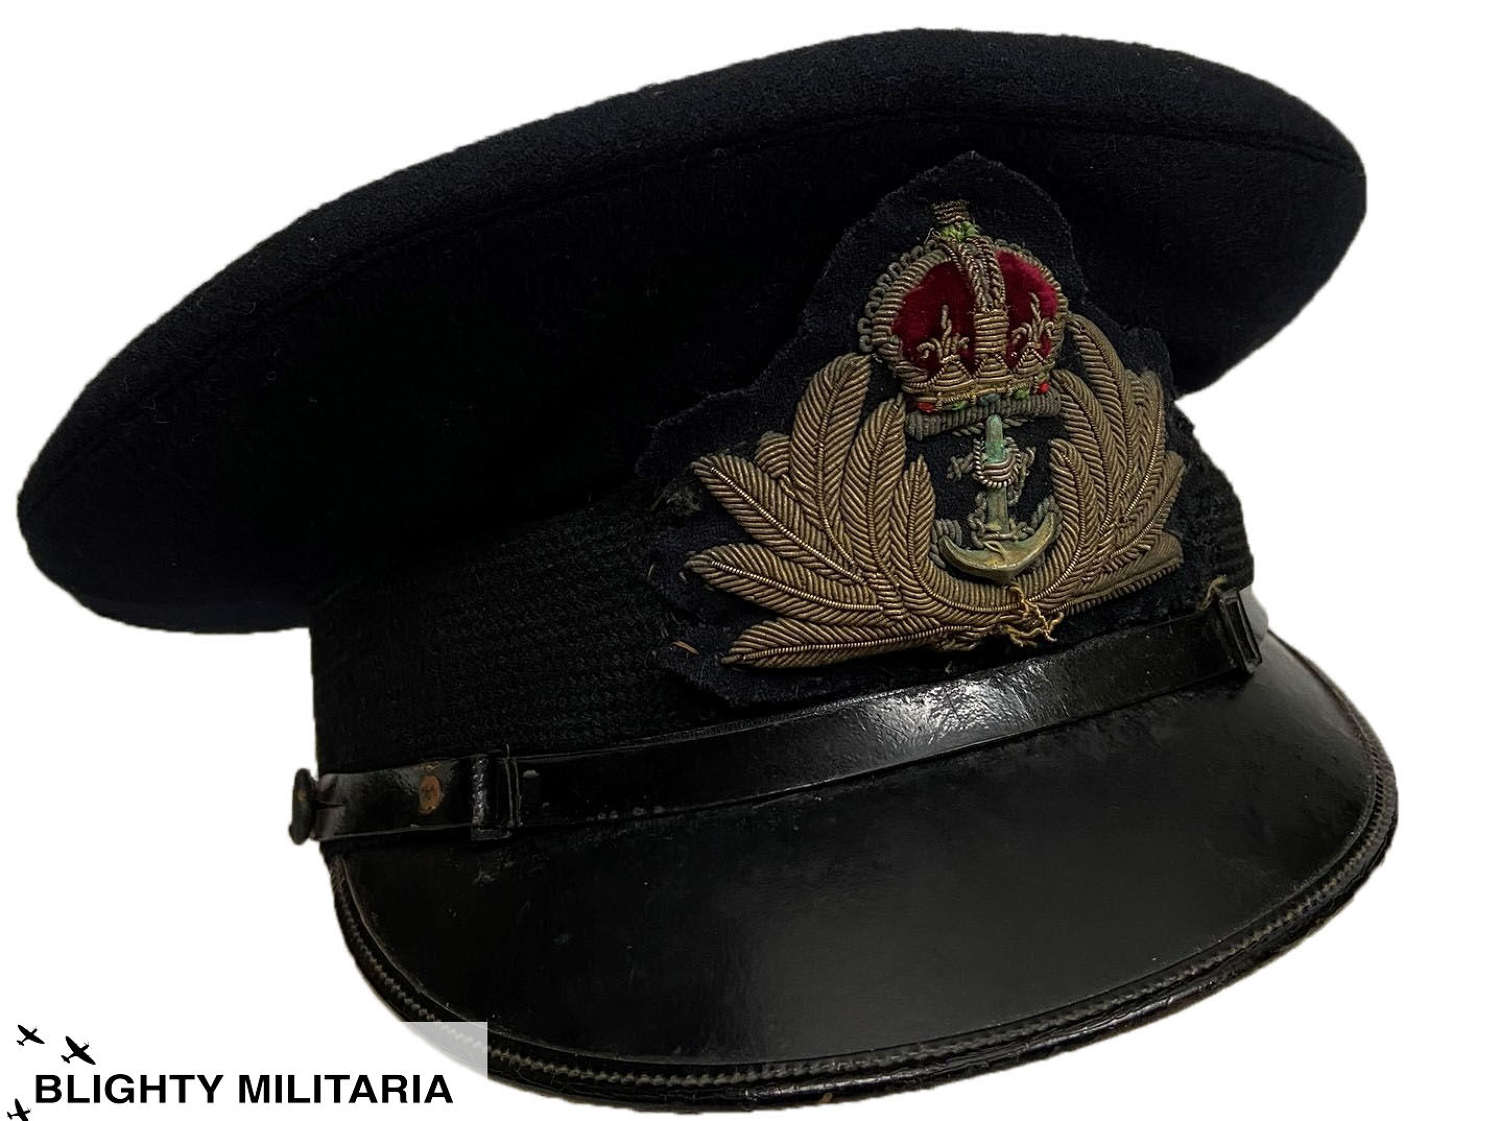 Original WW2 Period Royal Navy Officers Peaked Cap by 'Gieves'